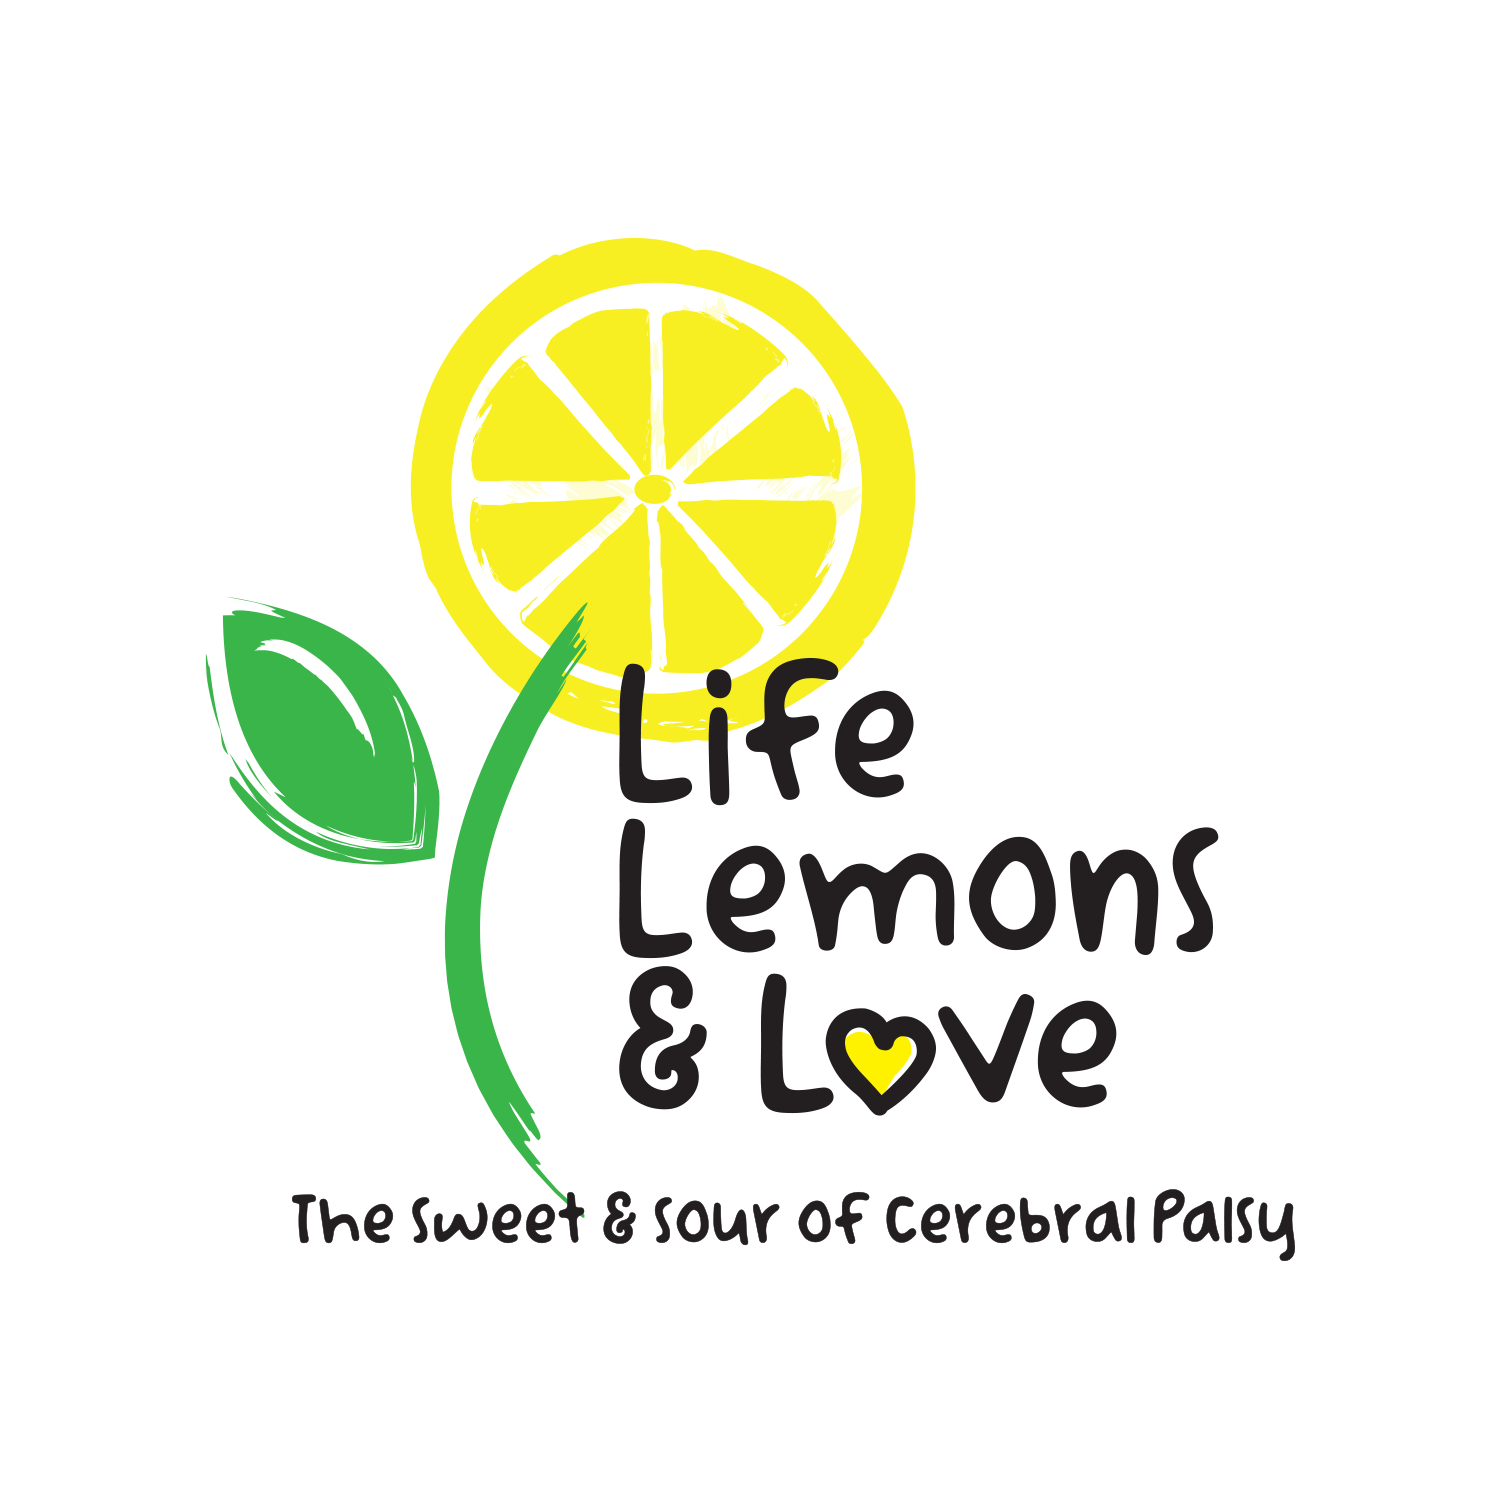 Introducing Life, Lemons & Love